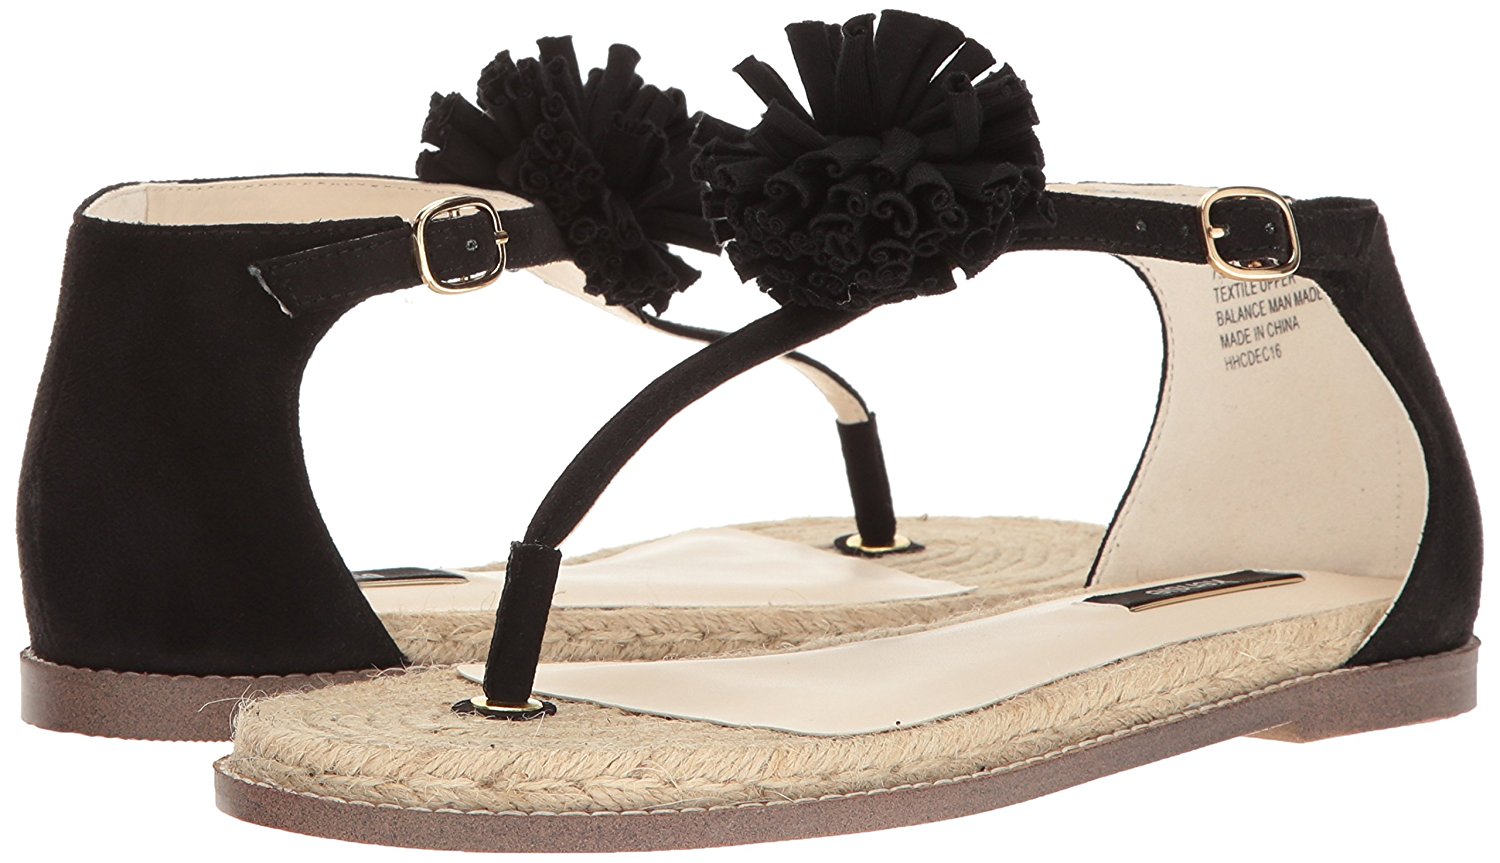 kensie Womens Flat Sandals in Black Color, Size 5 GOQ | eBay